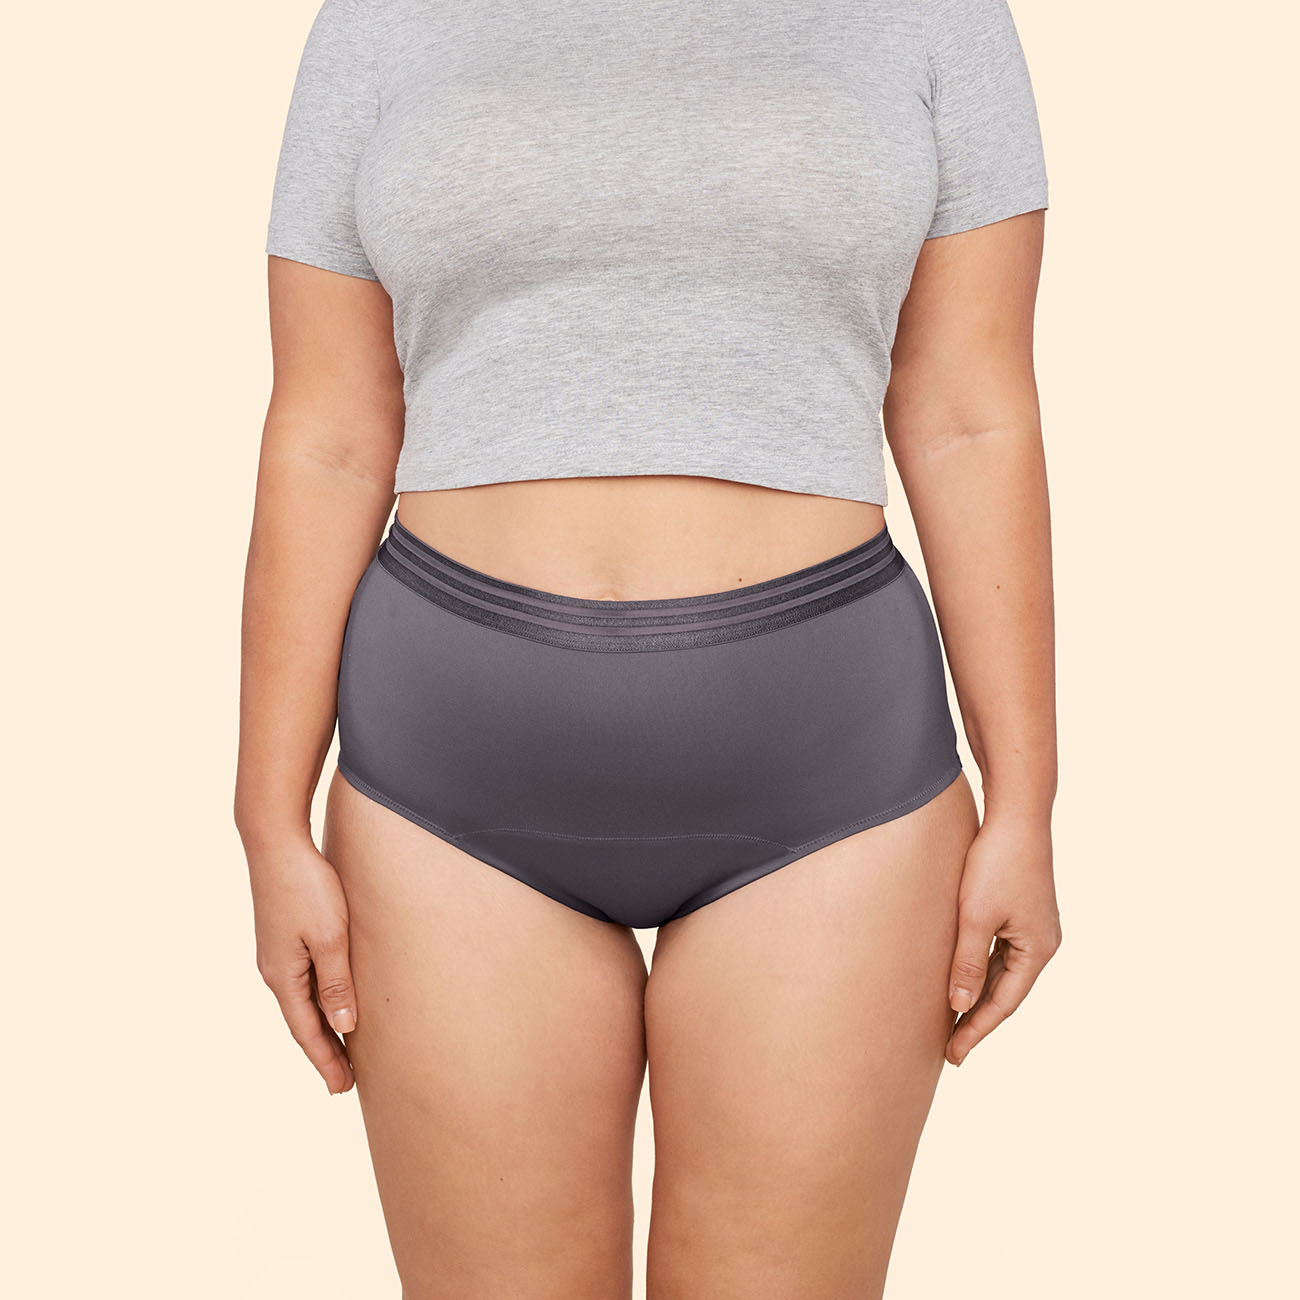  Speax by Thinx Hiphugger Incontinence Underwear for Women,  Washable Incontinence Underwear Women, Postpartum Underwear Feminine Care,  Beige, 4X-Large : Health & Household